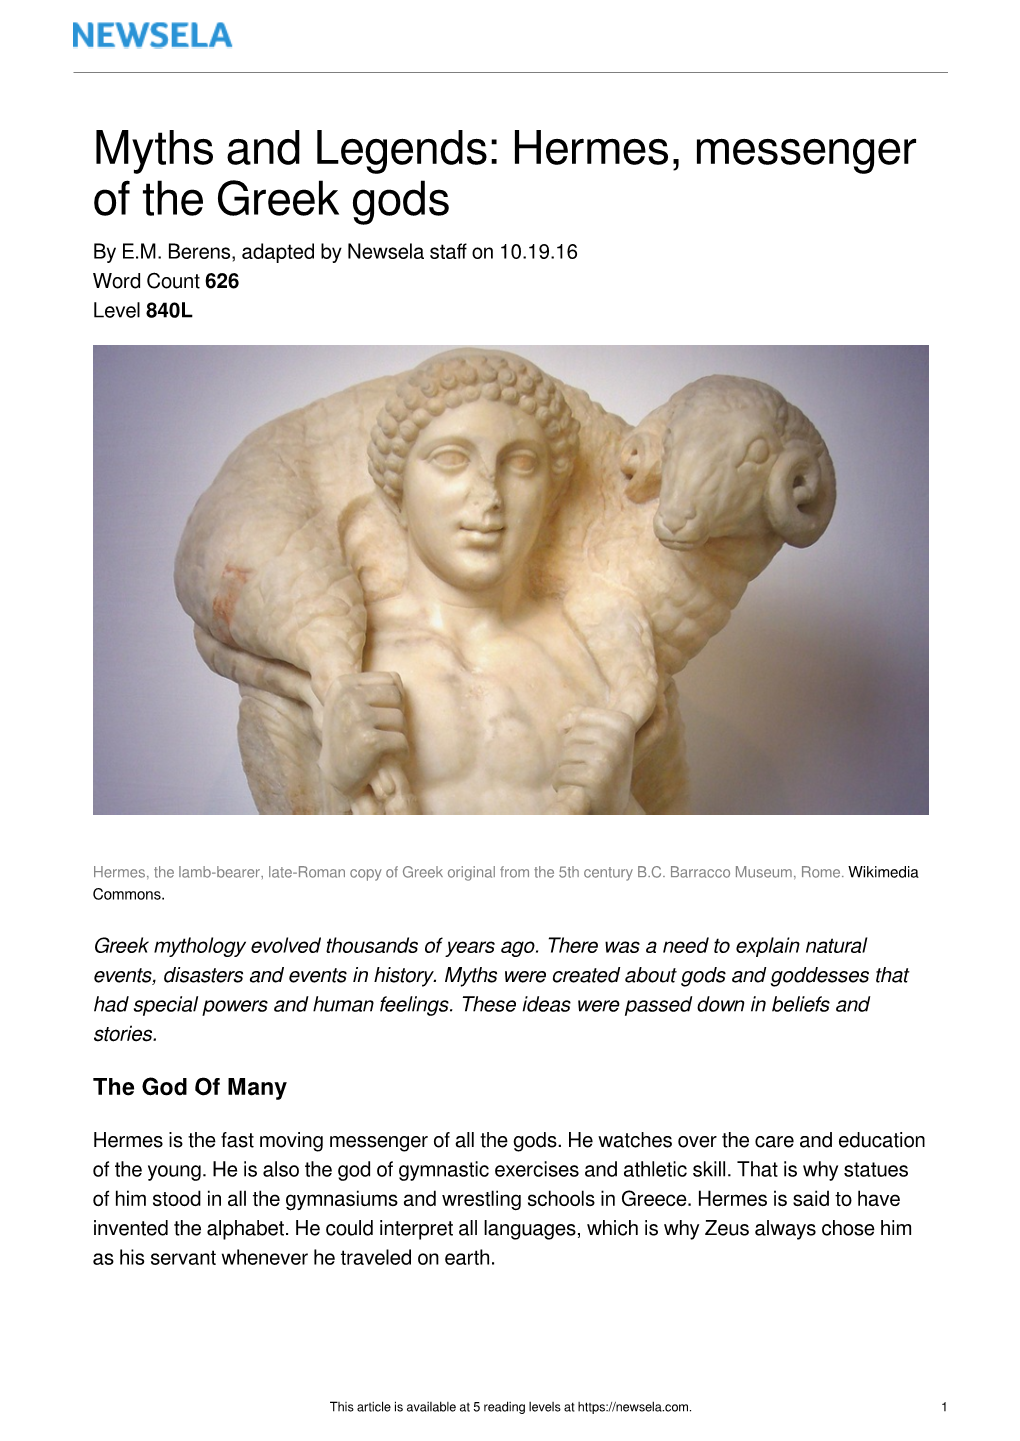 Myths and Legends: Hermes, Messenger of the Greek Gods by E.M